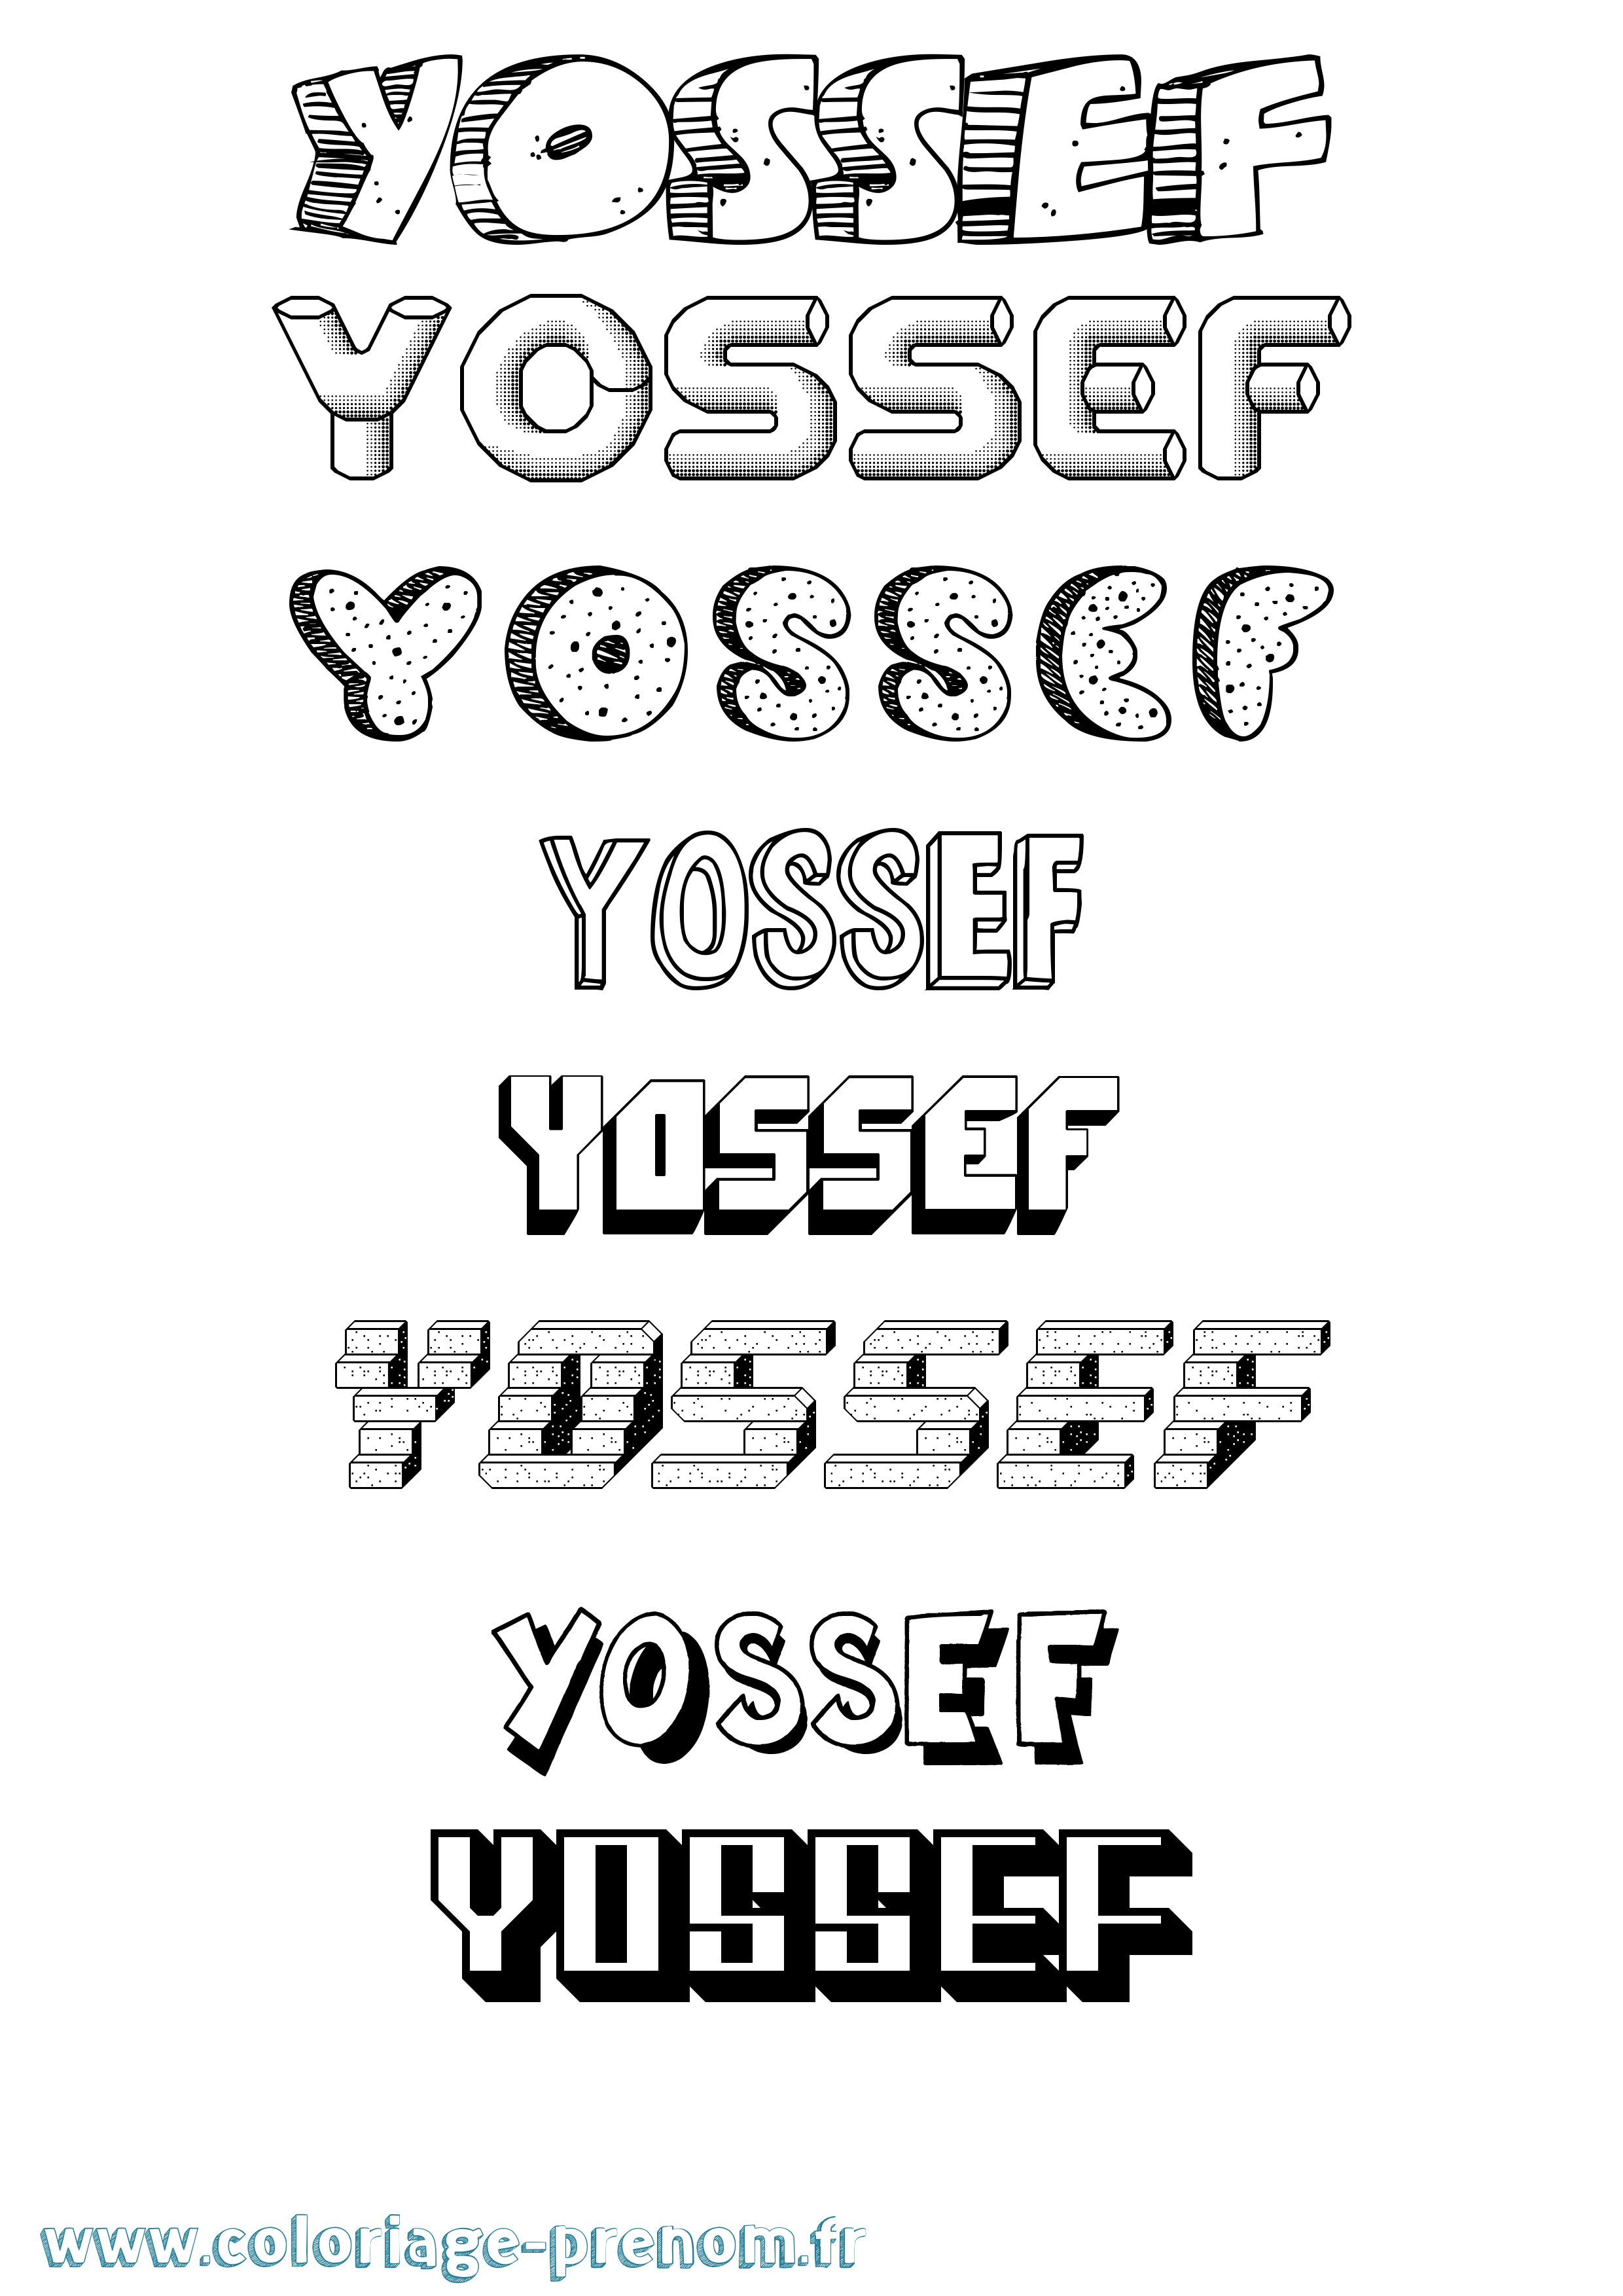 Coloriage prénom Yossef